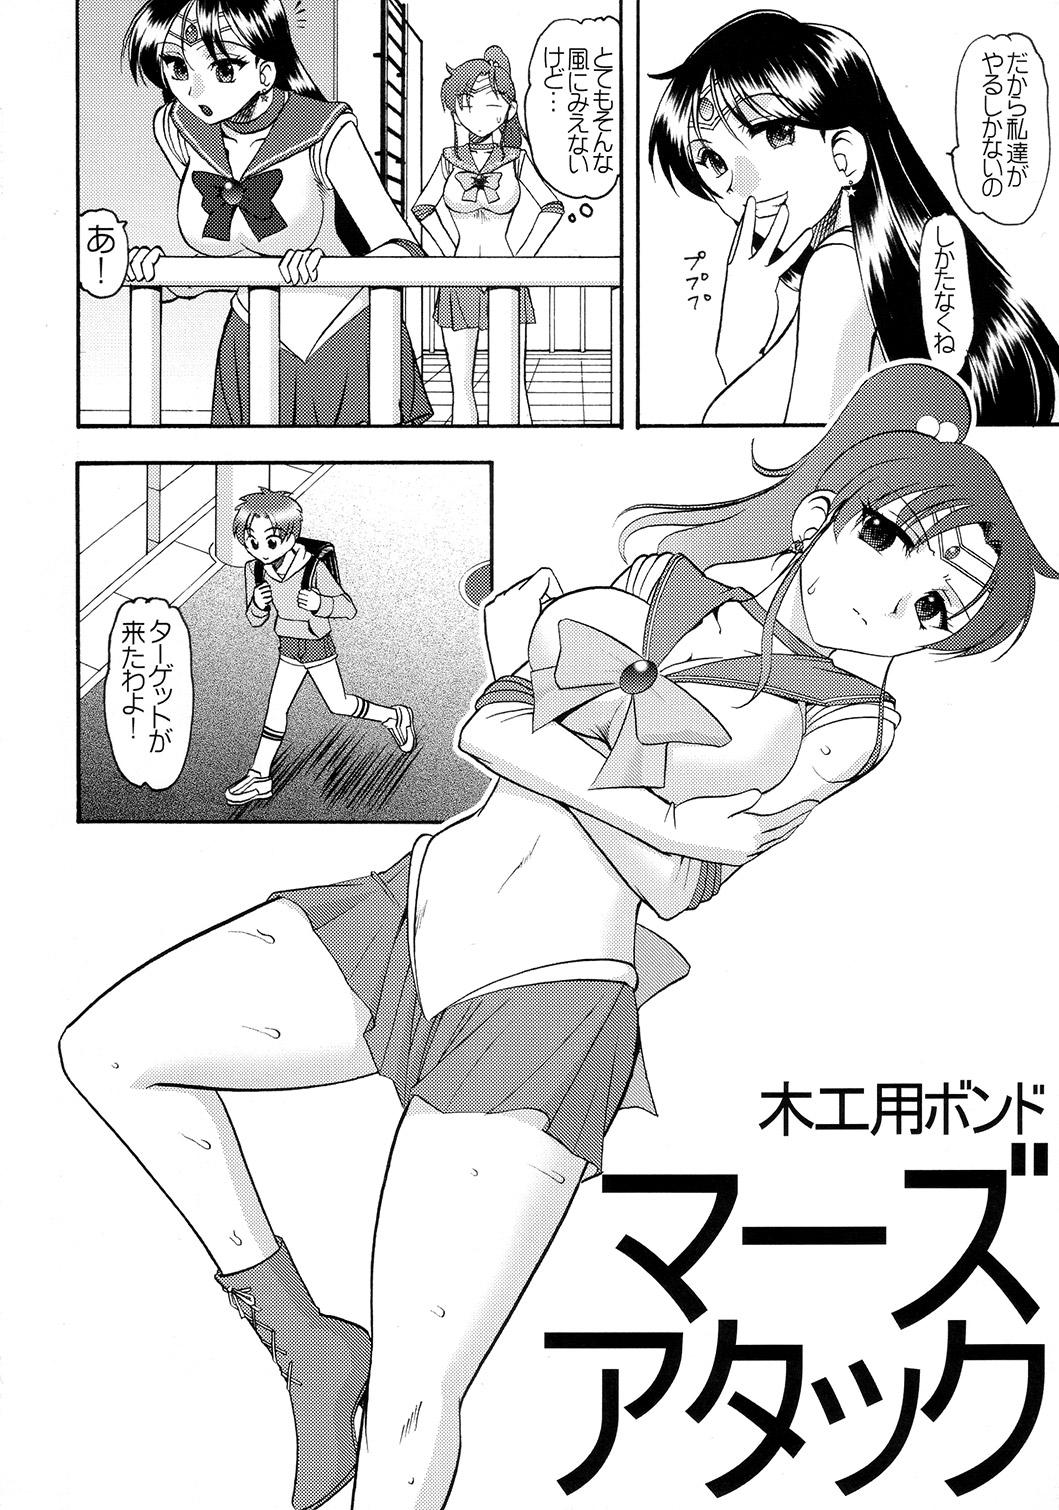 Assfuck SEMEDAIN G WORKS vol.33 - Wakusei Chokuretsu - Sailor moon Hot - Page 5